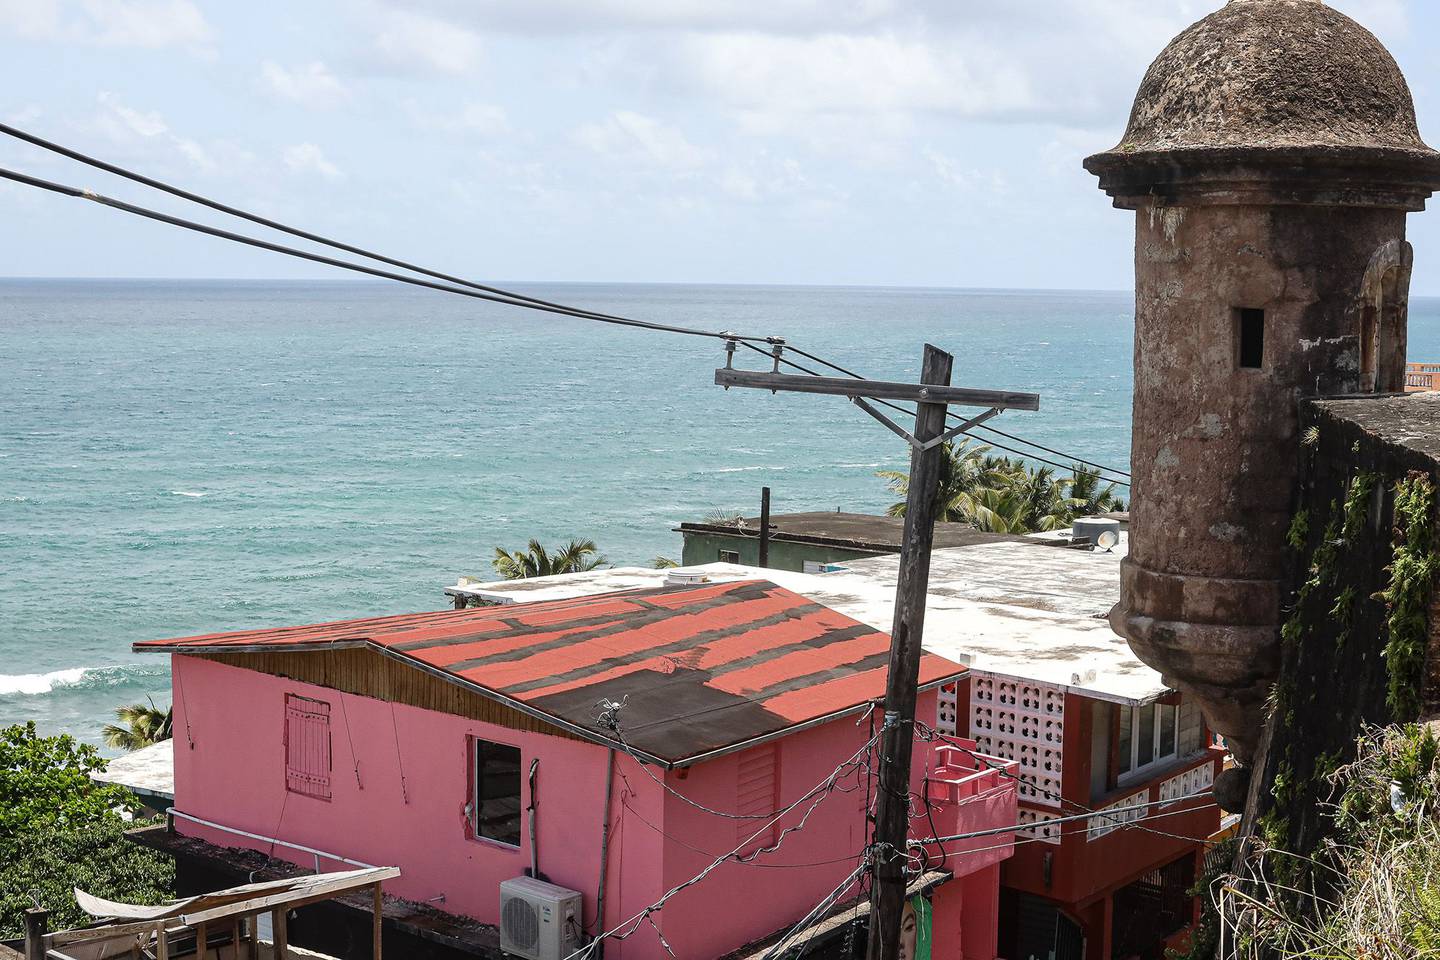 Utility poles in the La Perla neighborhood of San Juan, Puerto Rico.